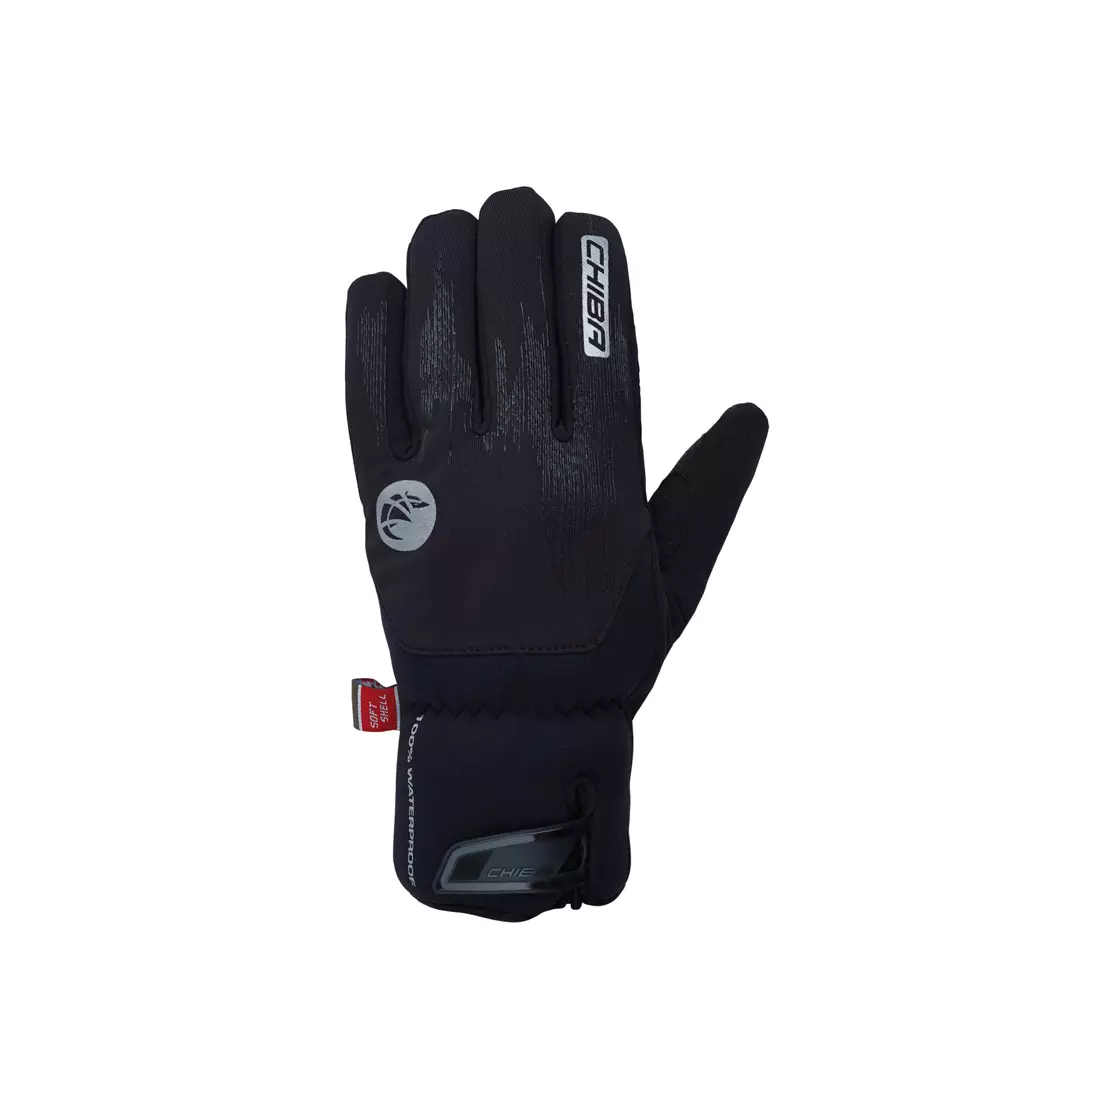 CHIBA DRY STAR SUPERLIGHT winter cycling gloves, black 31217